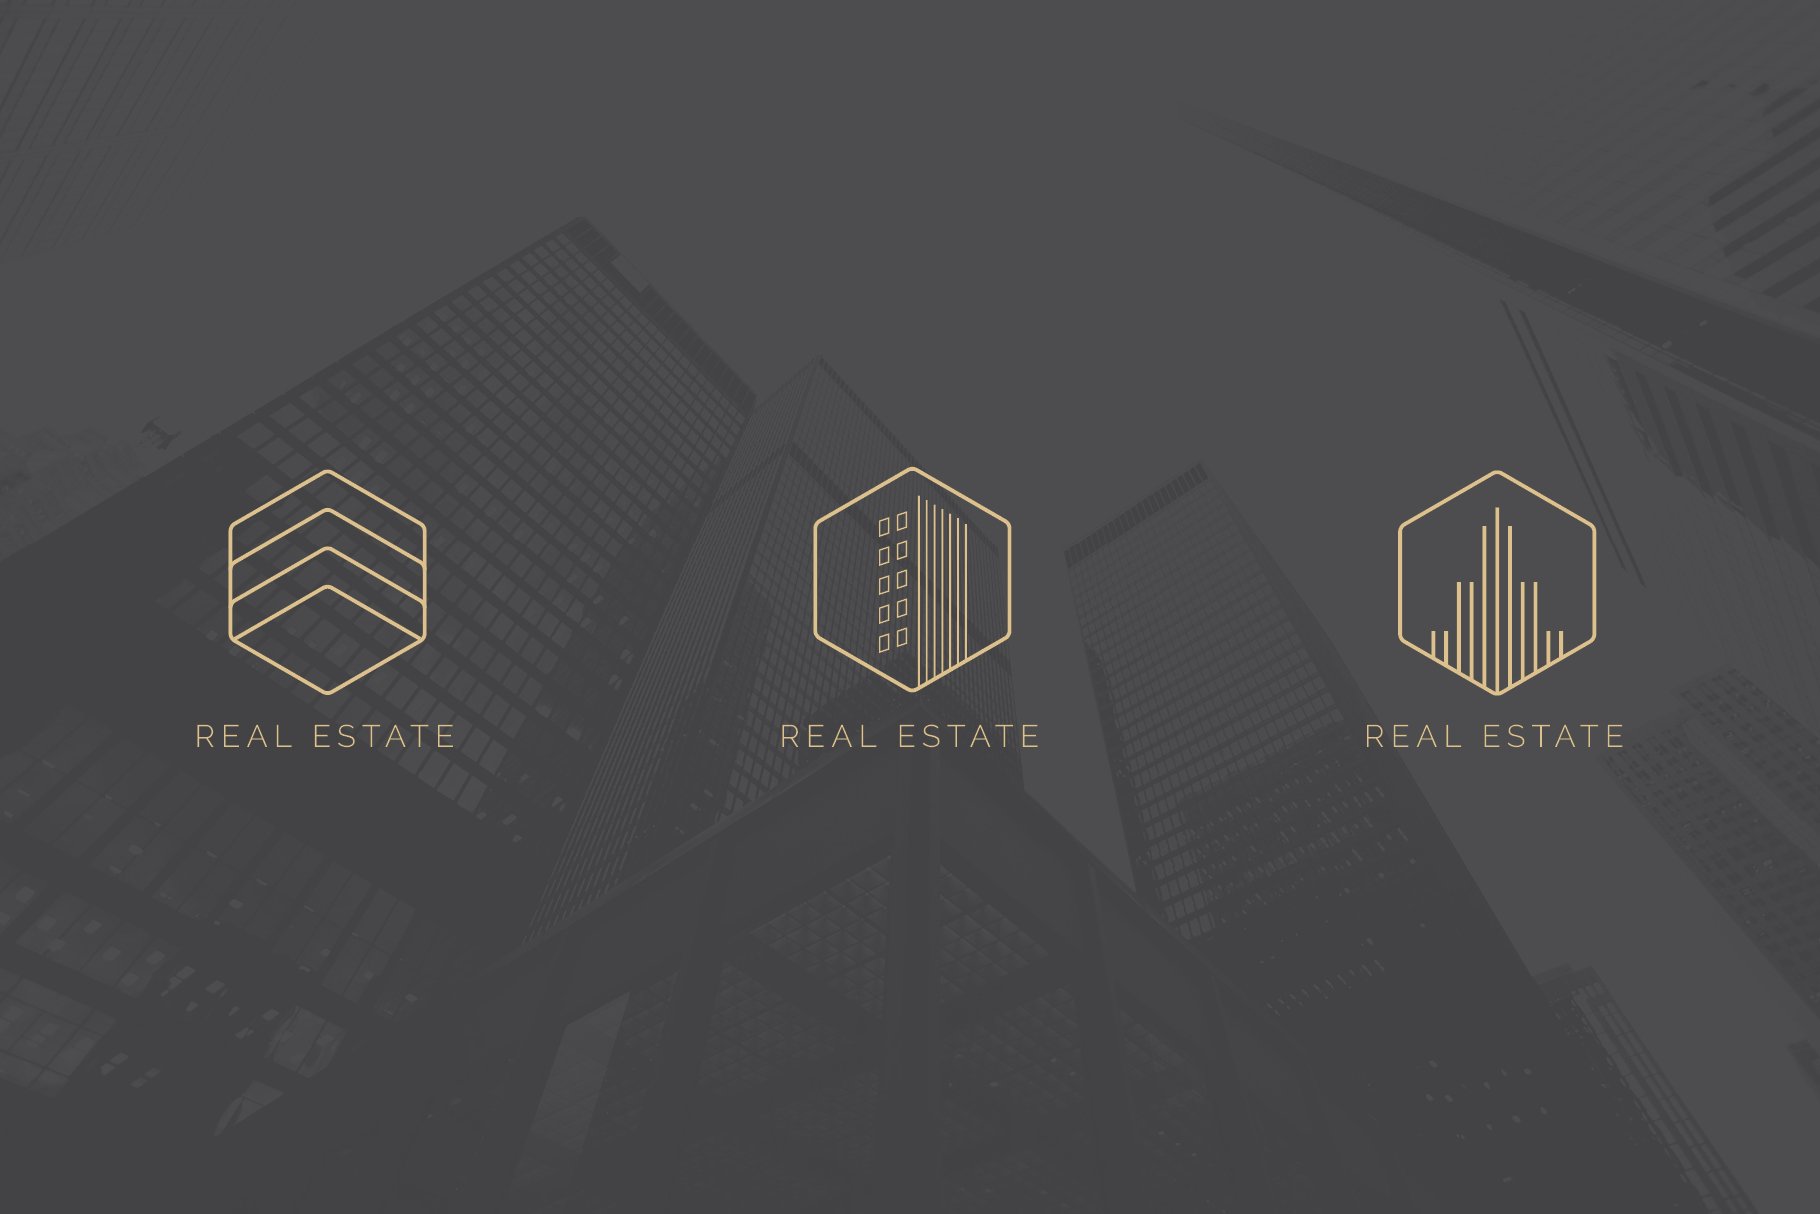 Three minimalistic real estate logos.